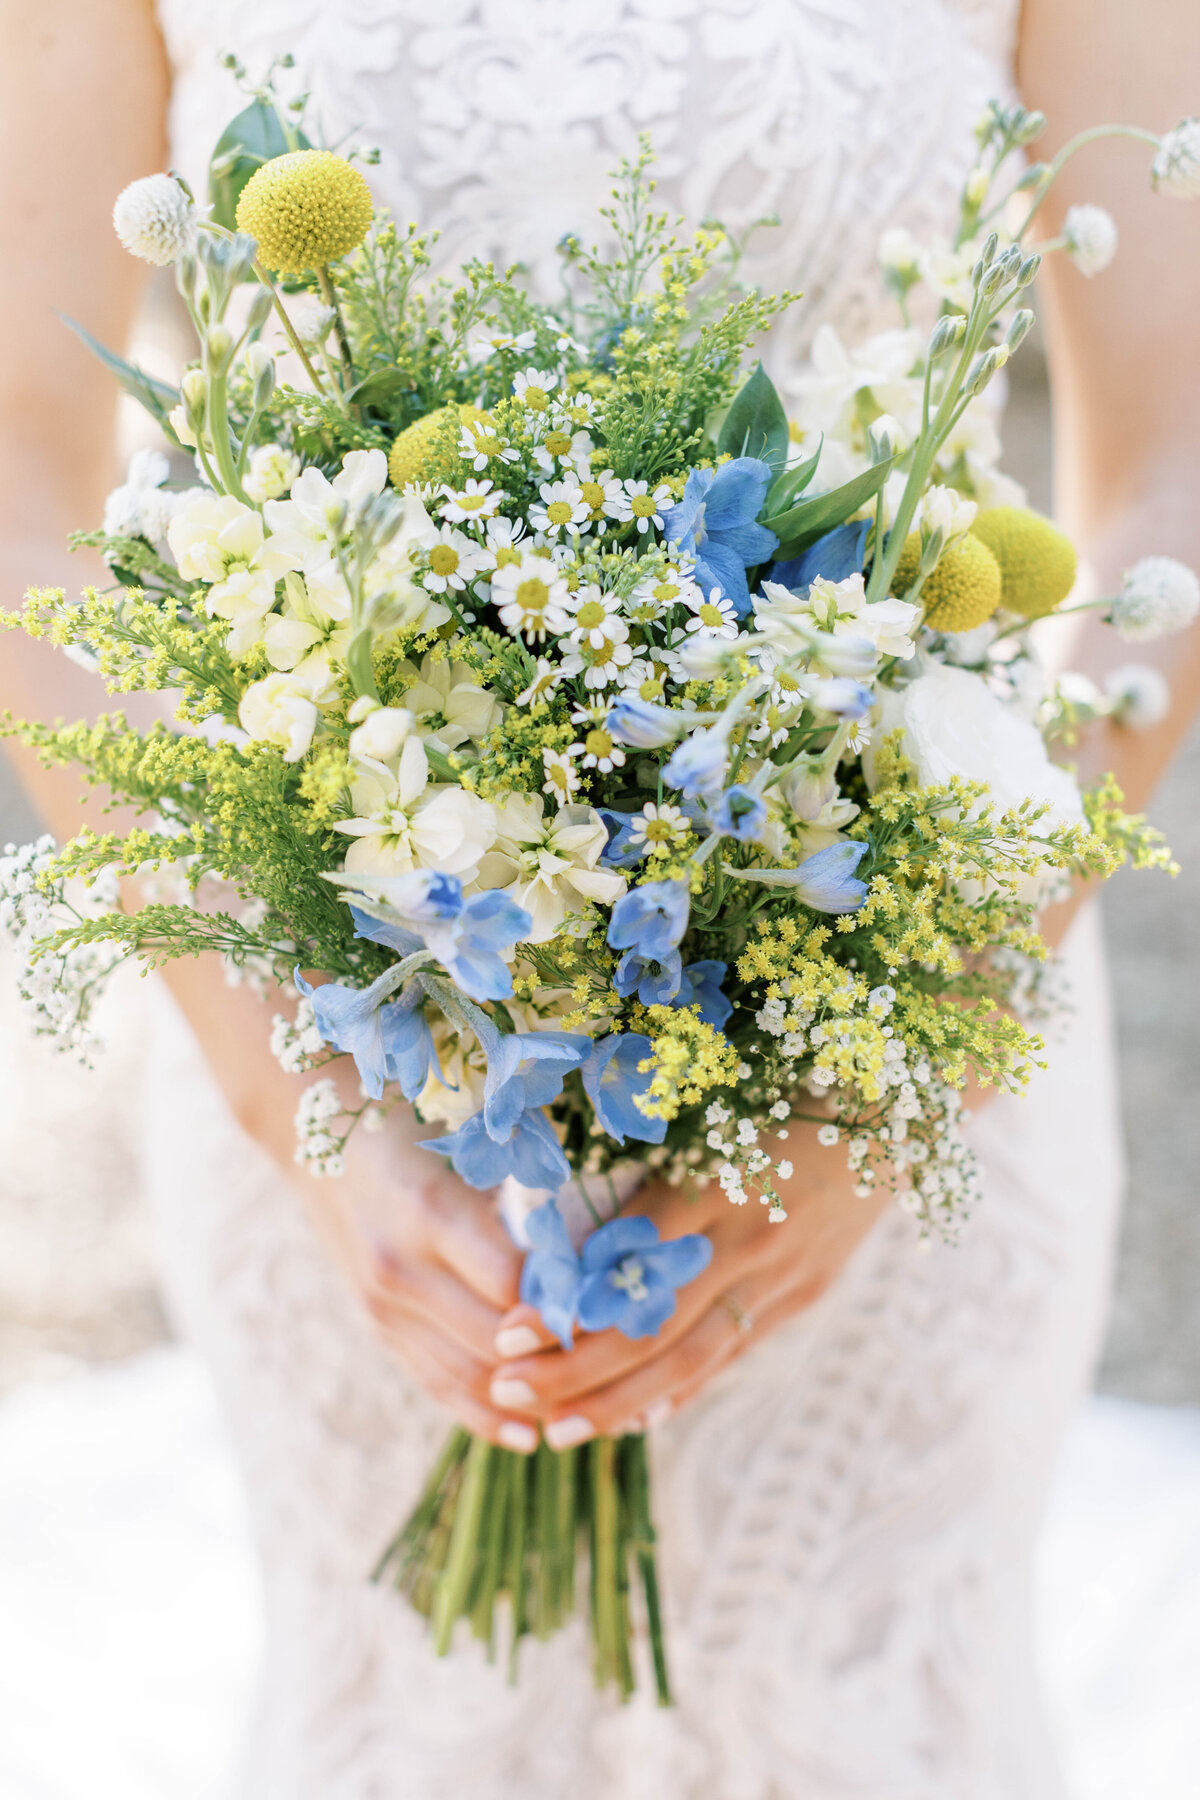 Custom florals for weddings by Primrose & Petals.